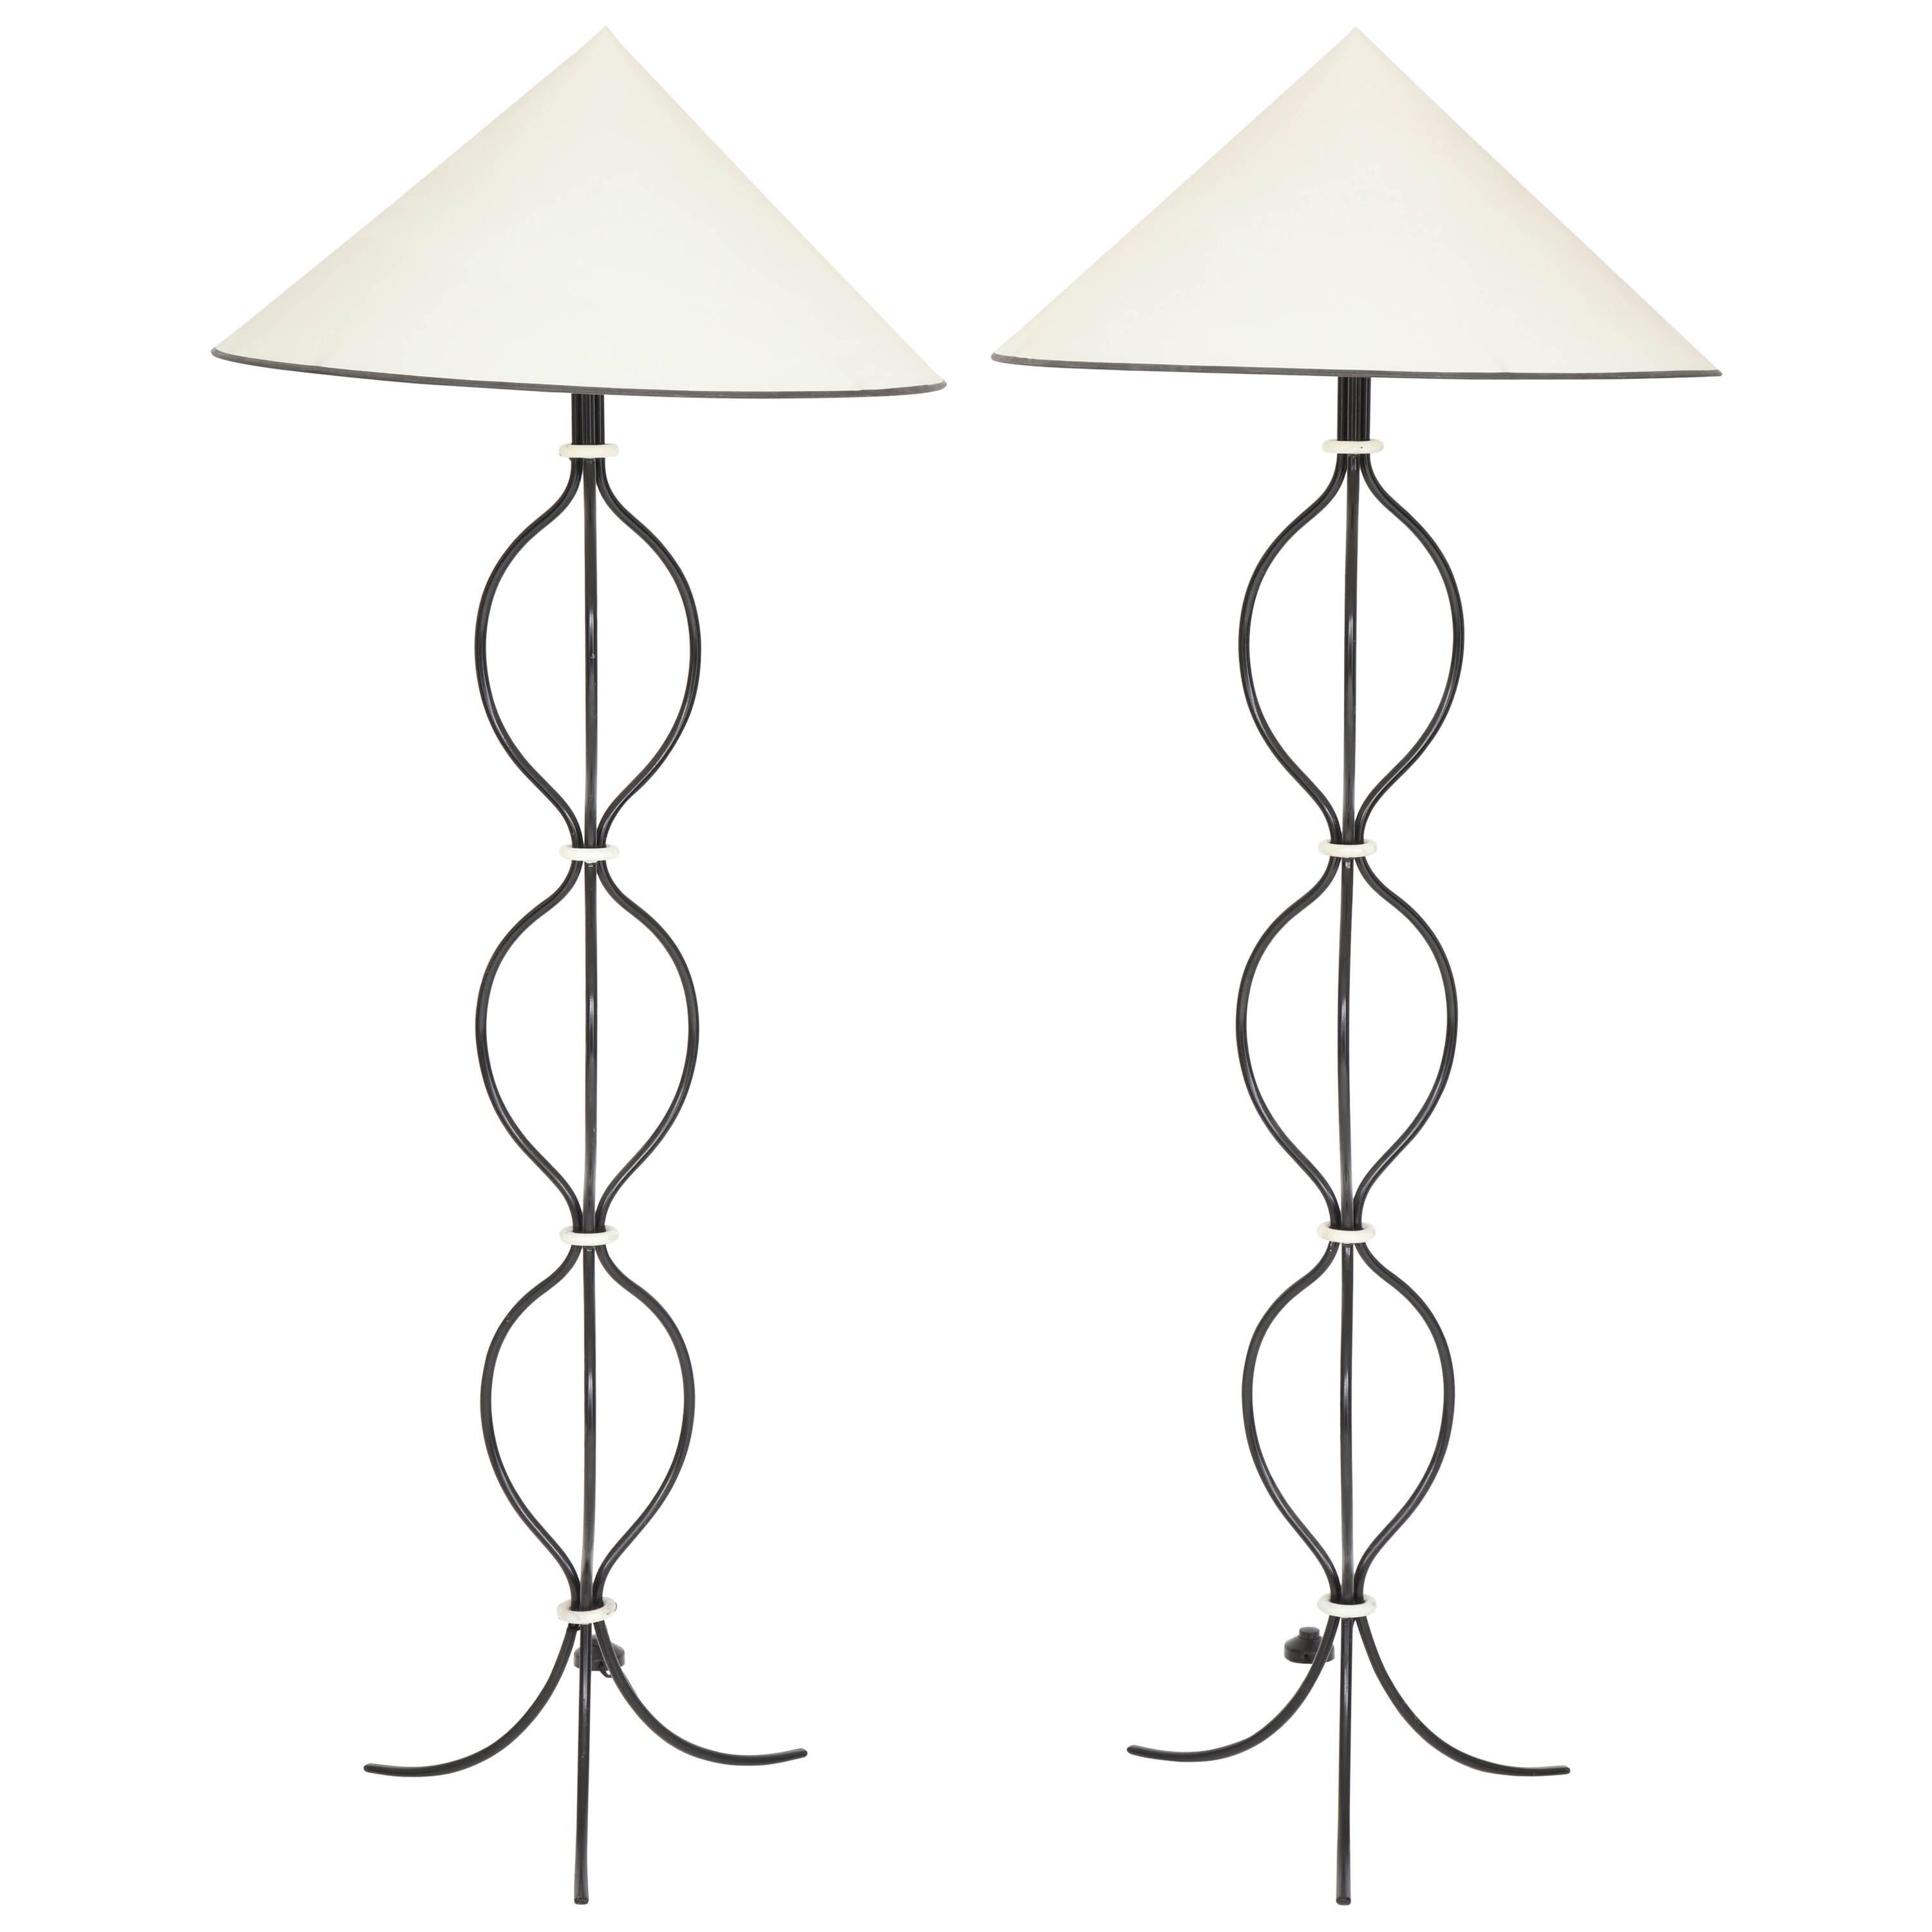 Jean Royere style "Anneaux" Floor Lamps